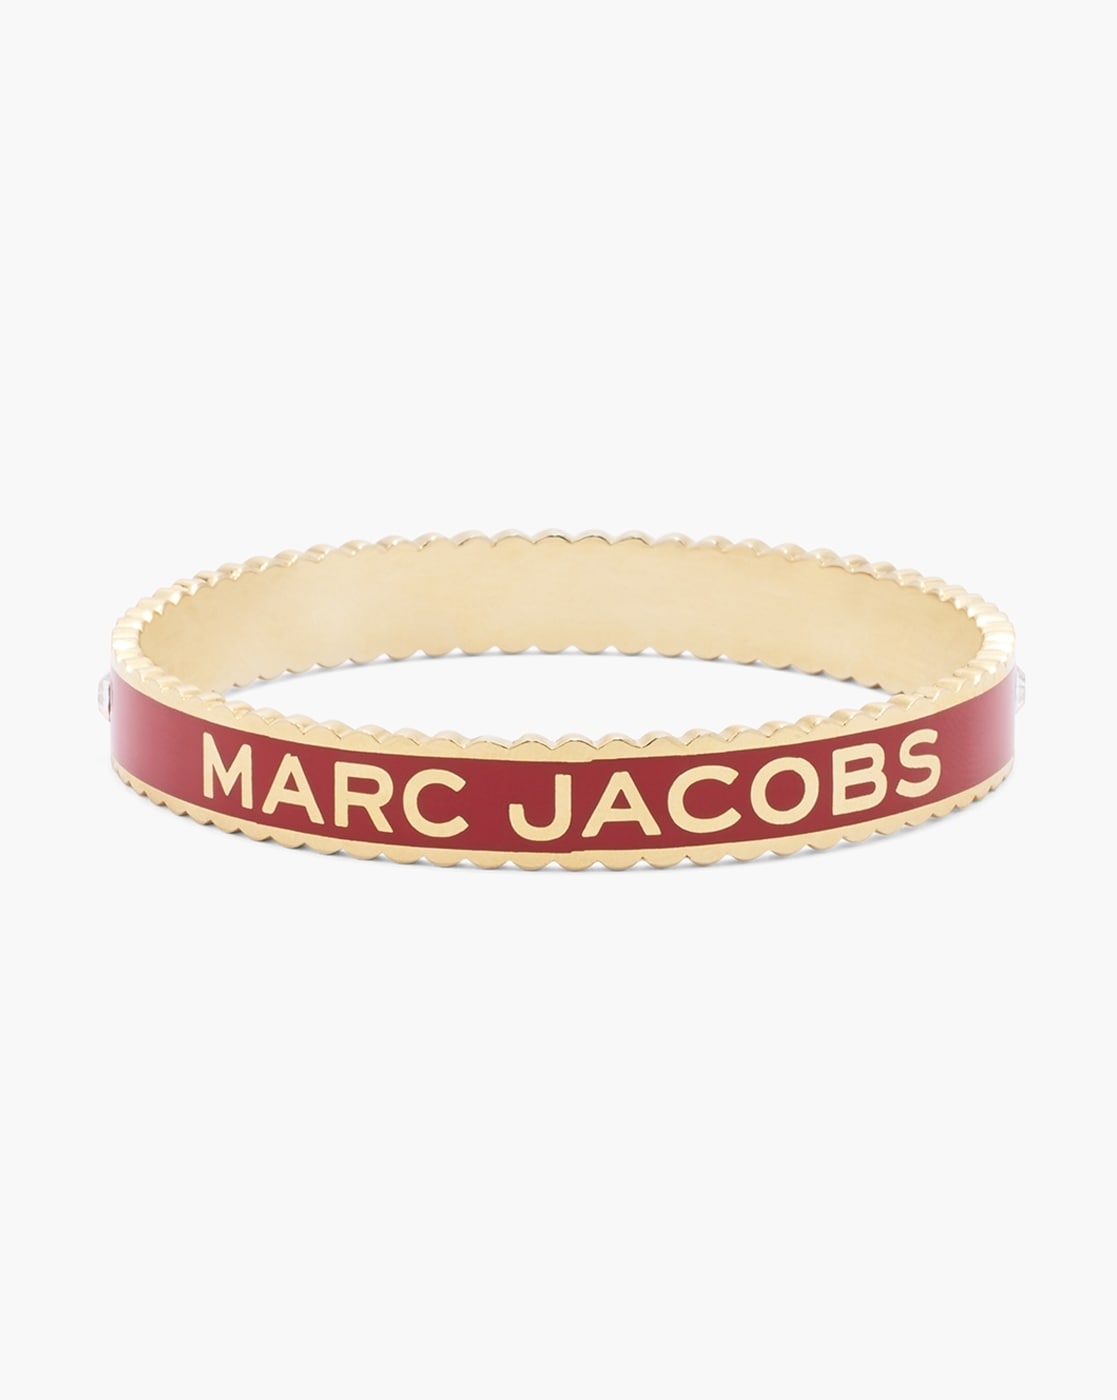 Marc by Marc Jacobs Disc-O Skinny Gold Bracelet - Teal Charm